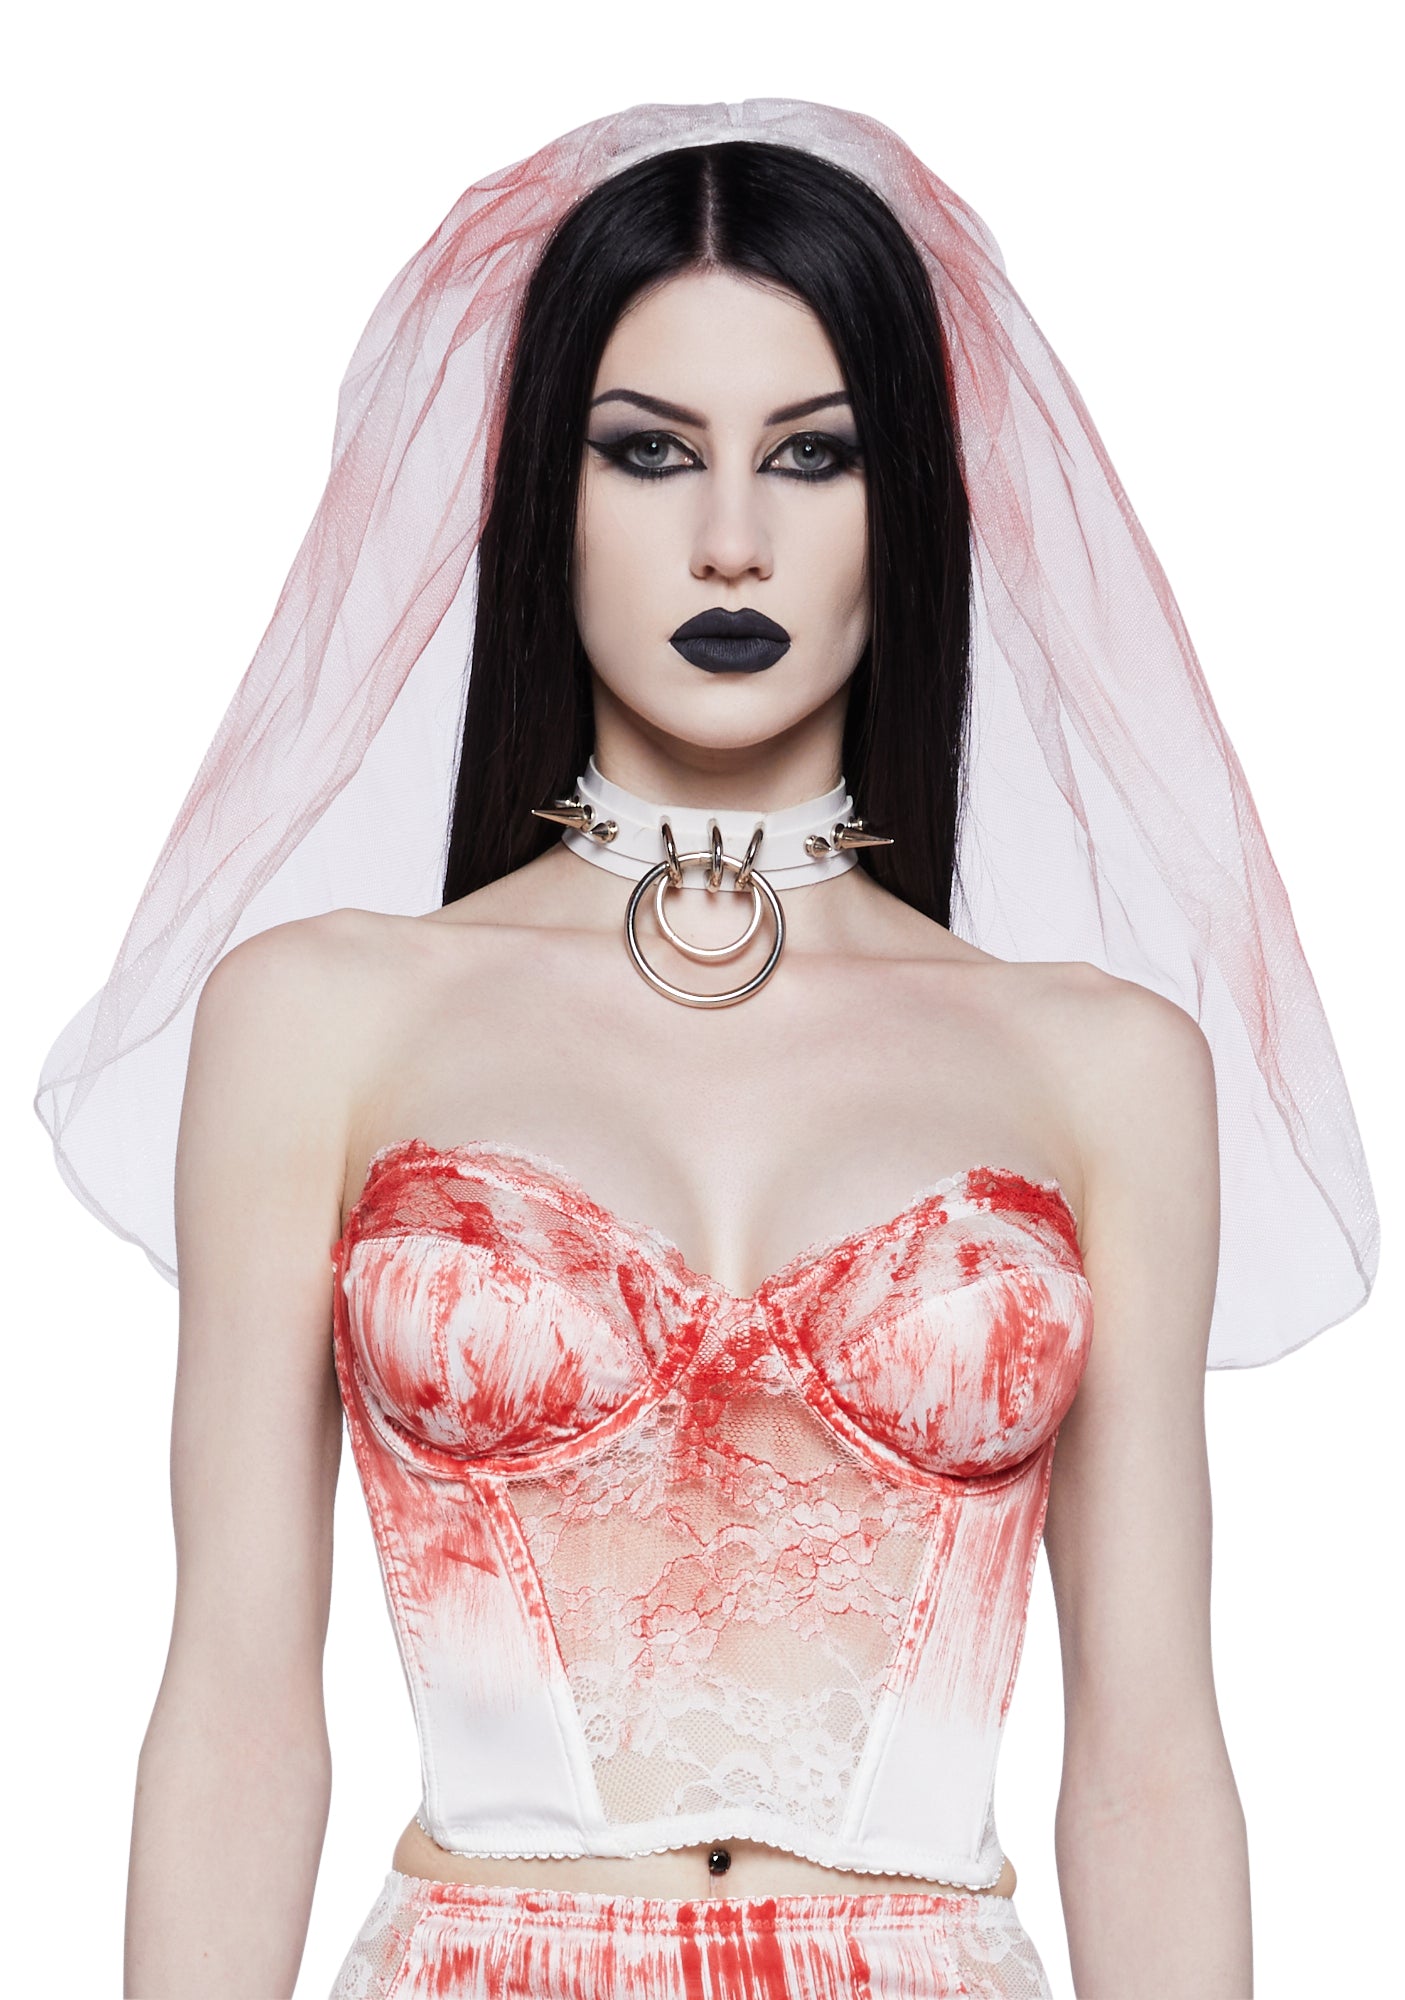  Women's Halloween Bloody Bride Costumes With Headdress